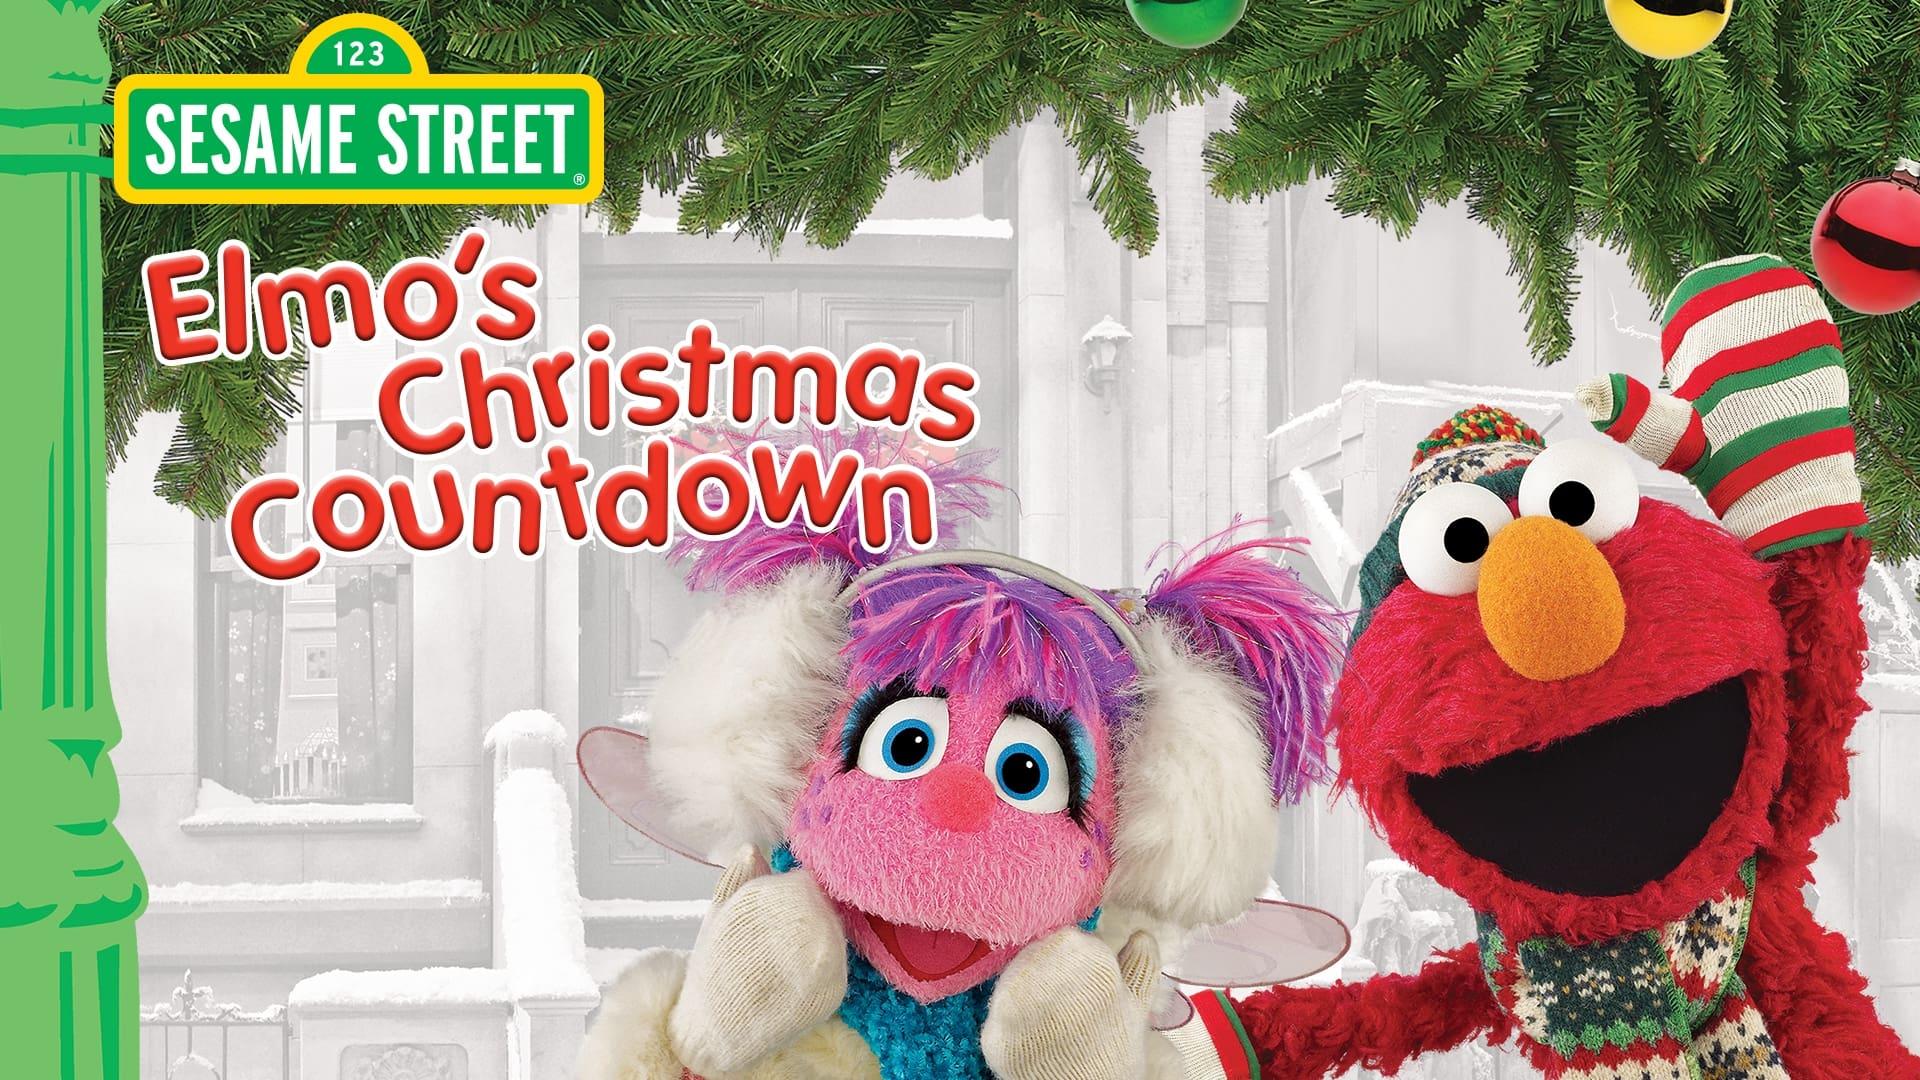 Sesame Street: Elmo's Christmas Countdown backdrop